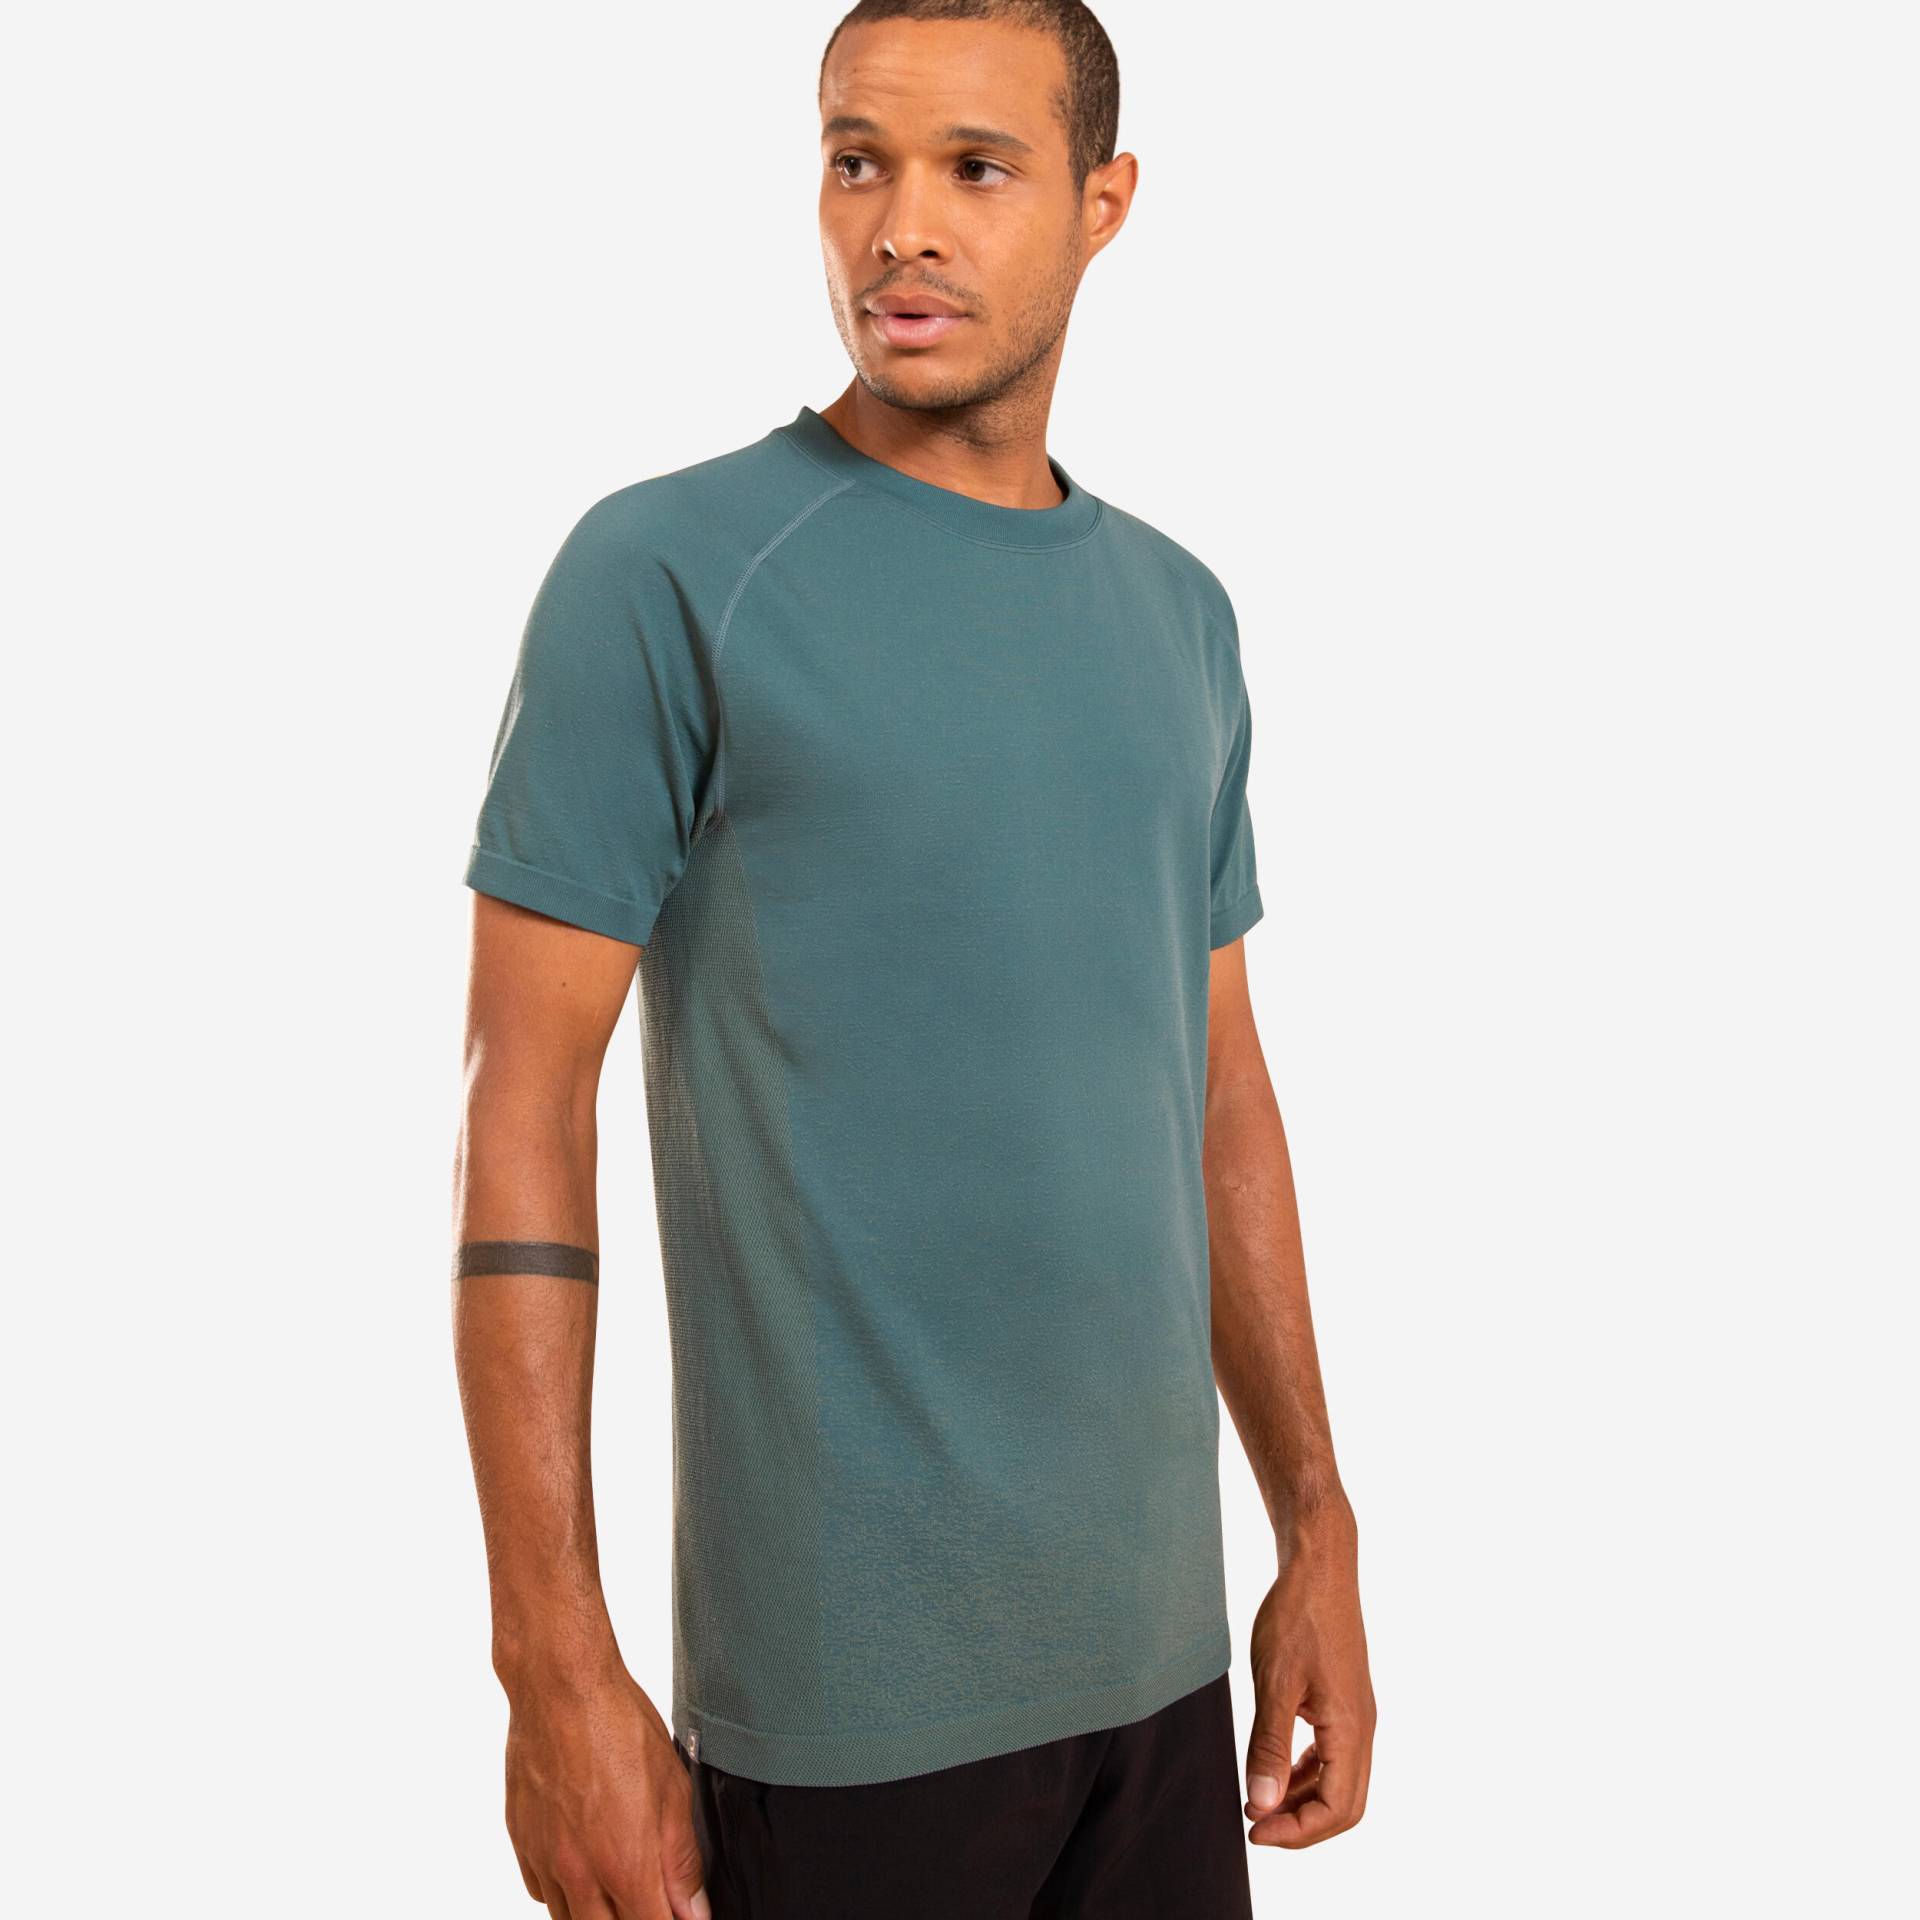 T-Shirt Herren dynamisches Yoga nahtlos - khaki von KIMJALY